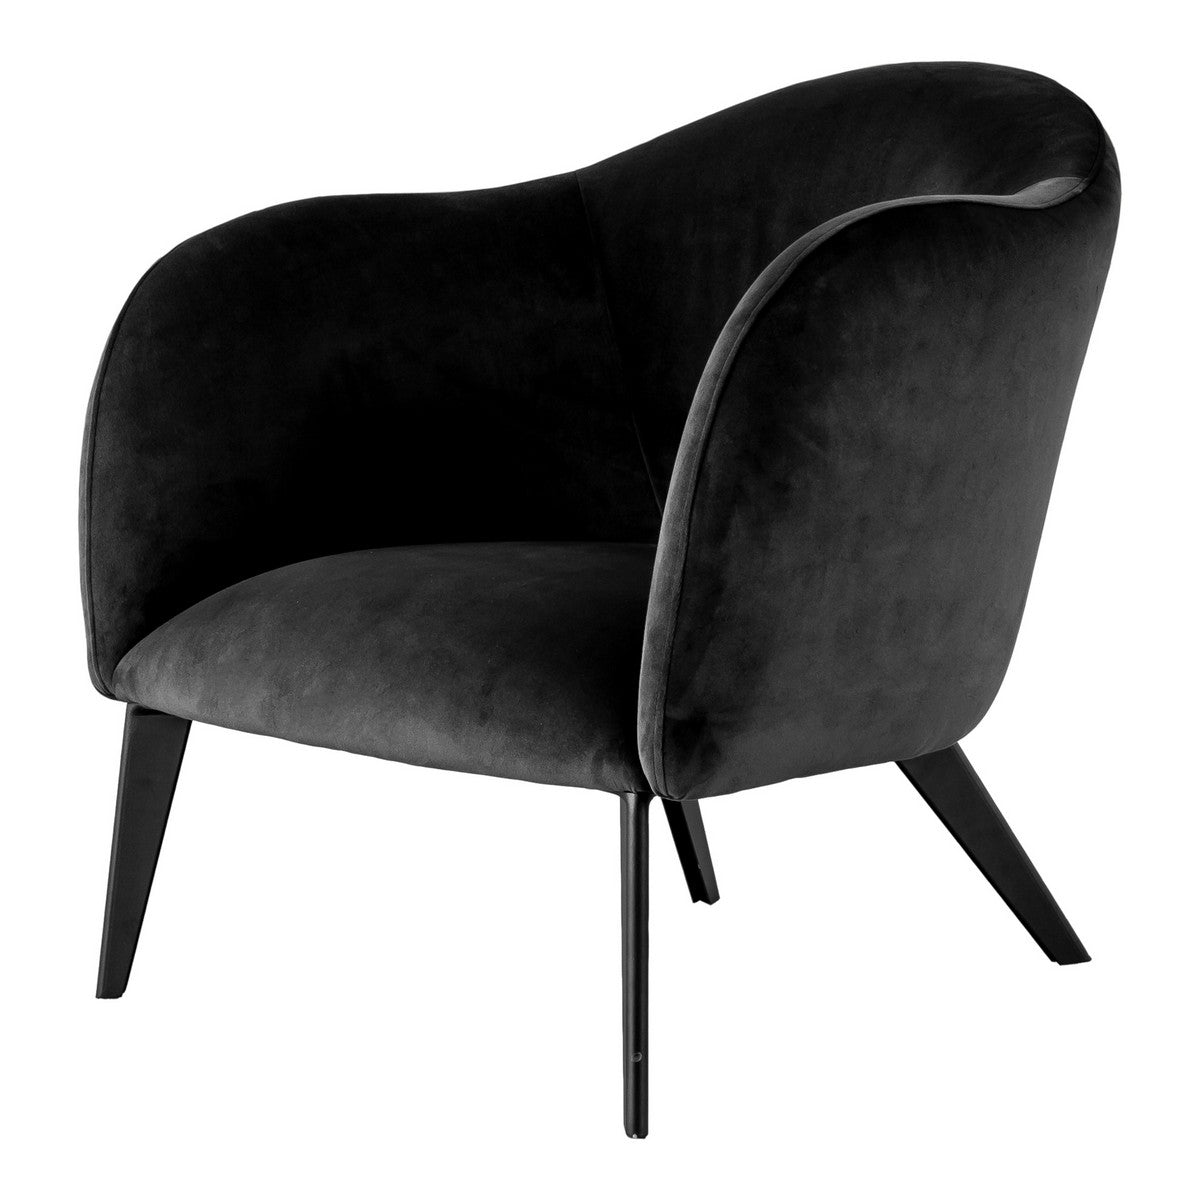 Moe's Home Collection Nuvo Chair Dark Grey - FJ-1005-25